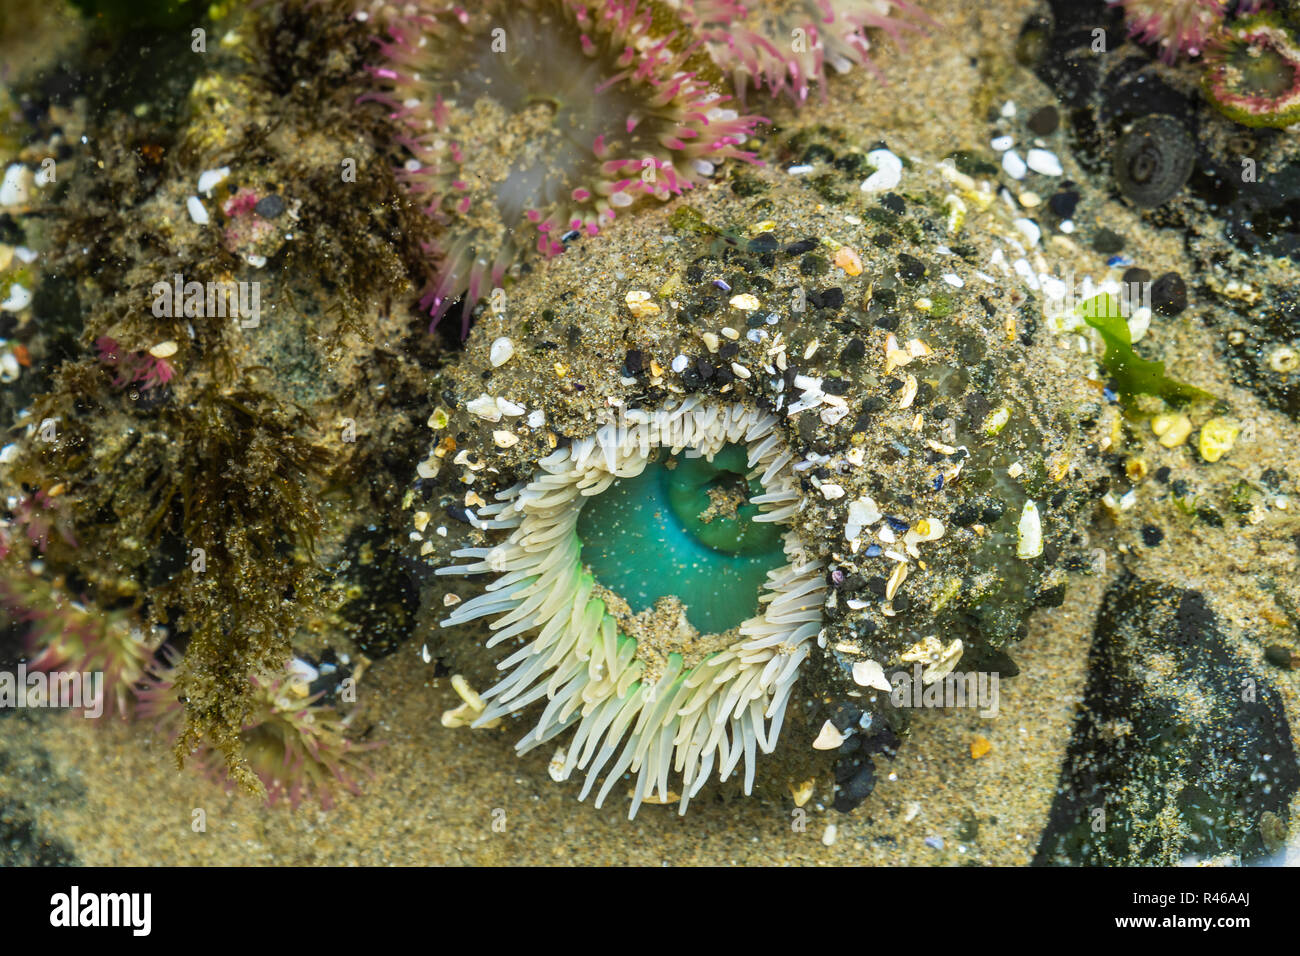 Sea anemone close-up, actiniaria, Oregon coast marine garden, Cannon Beach, USA. Stock Photo